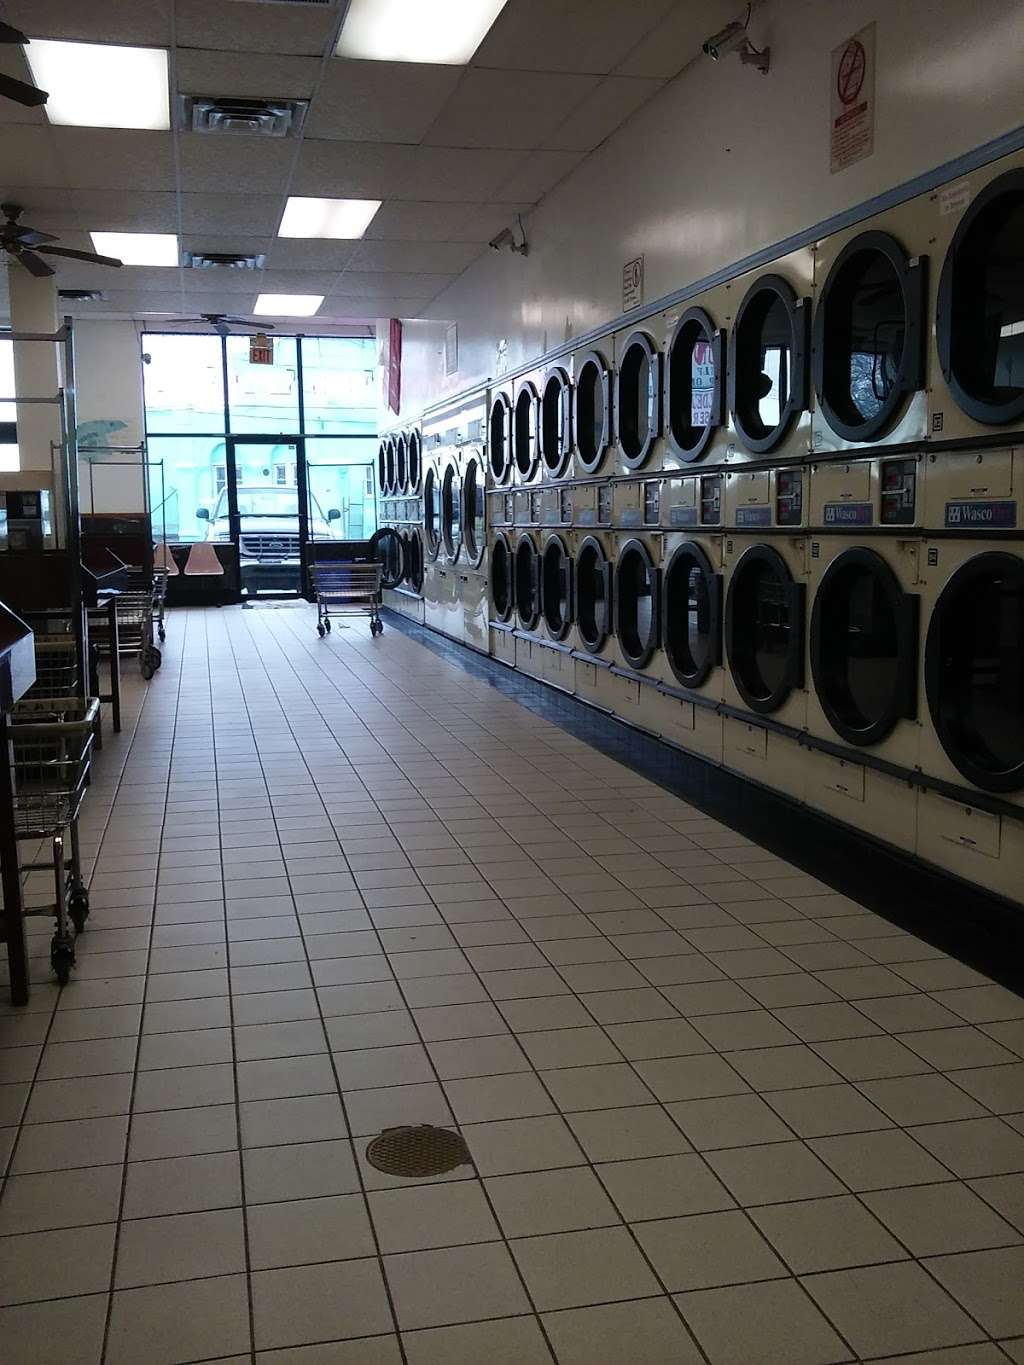 A Laundromat | 6010 Oxford Ave, Philadelphia, PA 19111, USA | Phone: (215) 537-5115